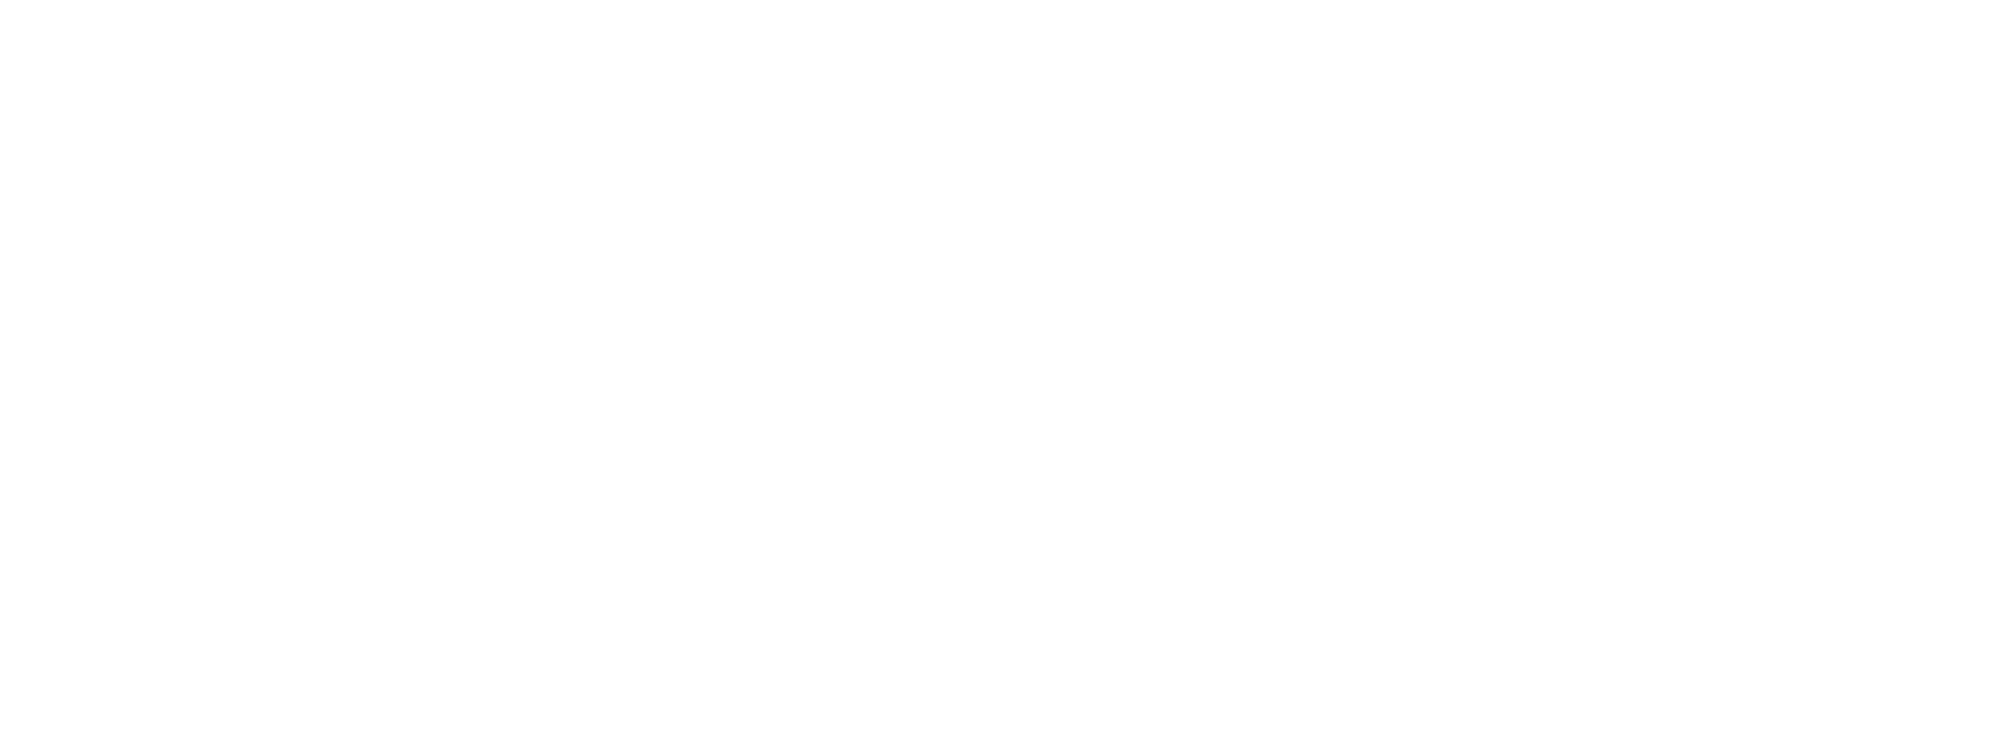 noblechairs Mercedes-AMG Petronas Formula One Team title logo